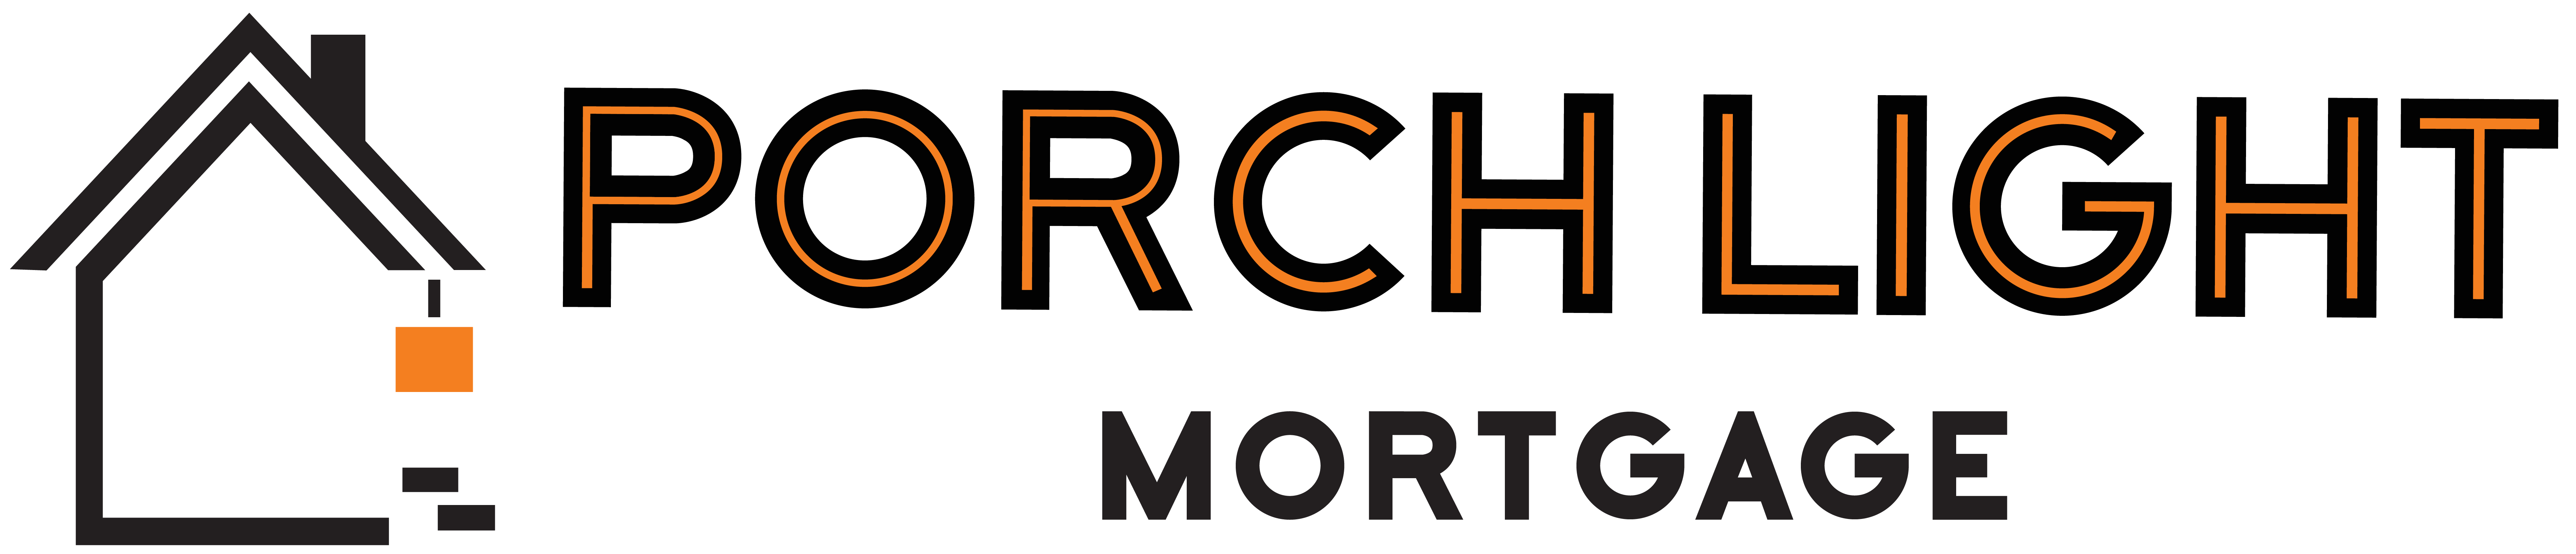 Porch Light Mortgage